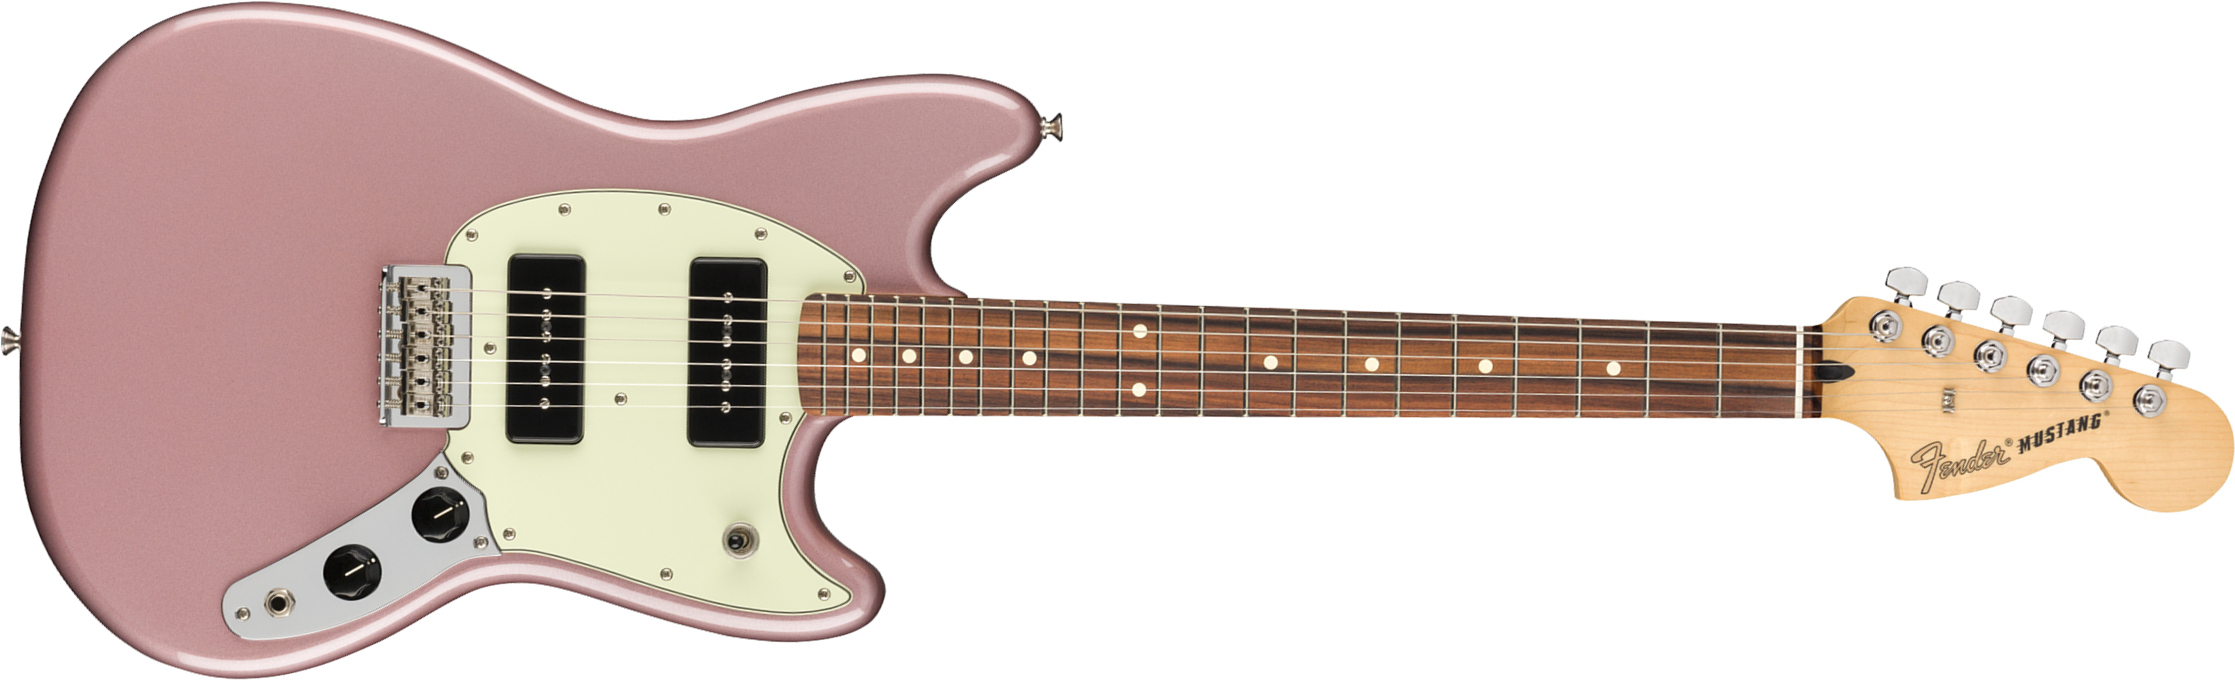 Fender Mustang Player 90 Mex Ht 2p90 Pf - Burgundy Mist Metallic - Retro-rock elektrische gitaar - Main picture